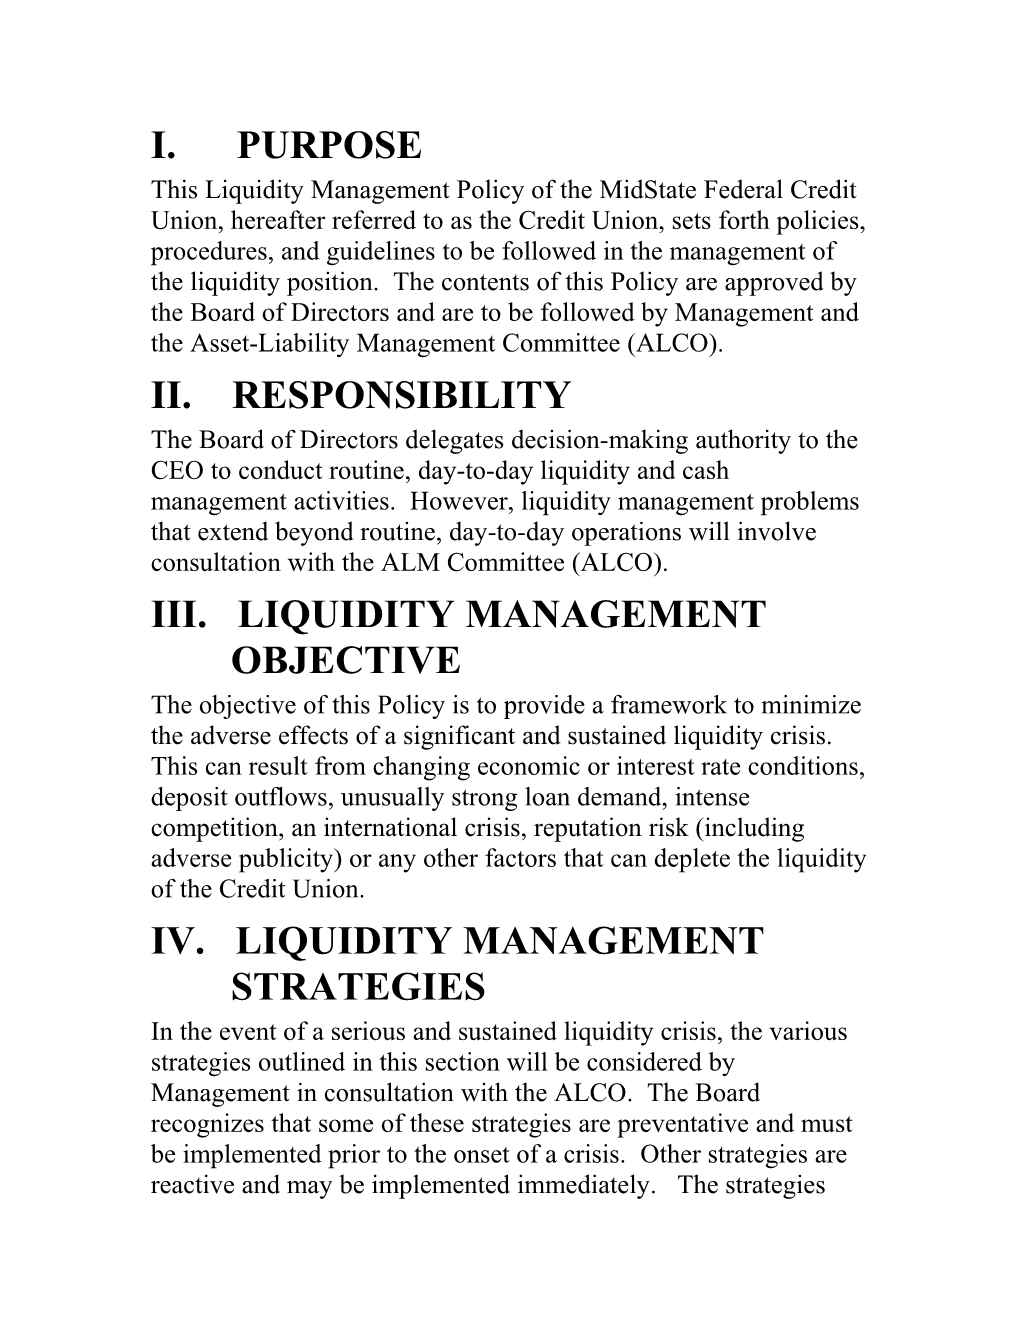 Iii. Liquidity Management Objective